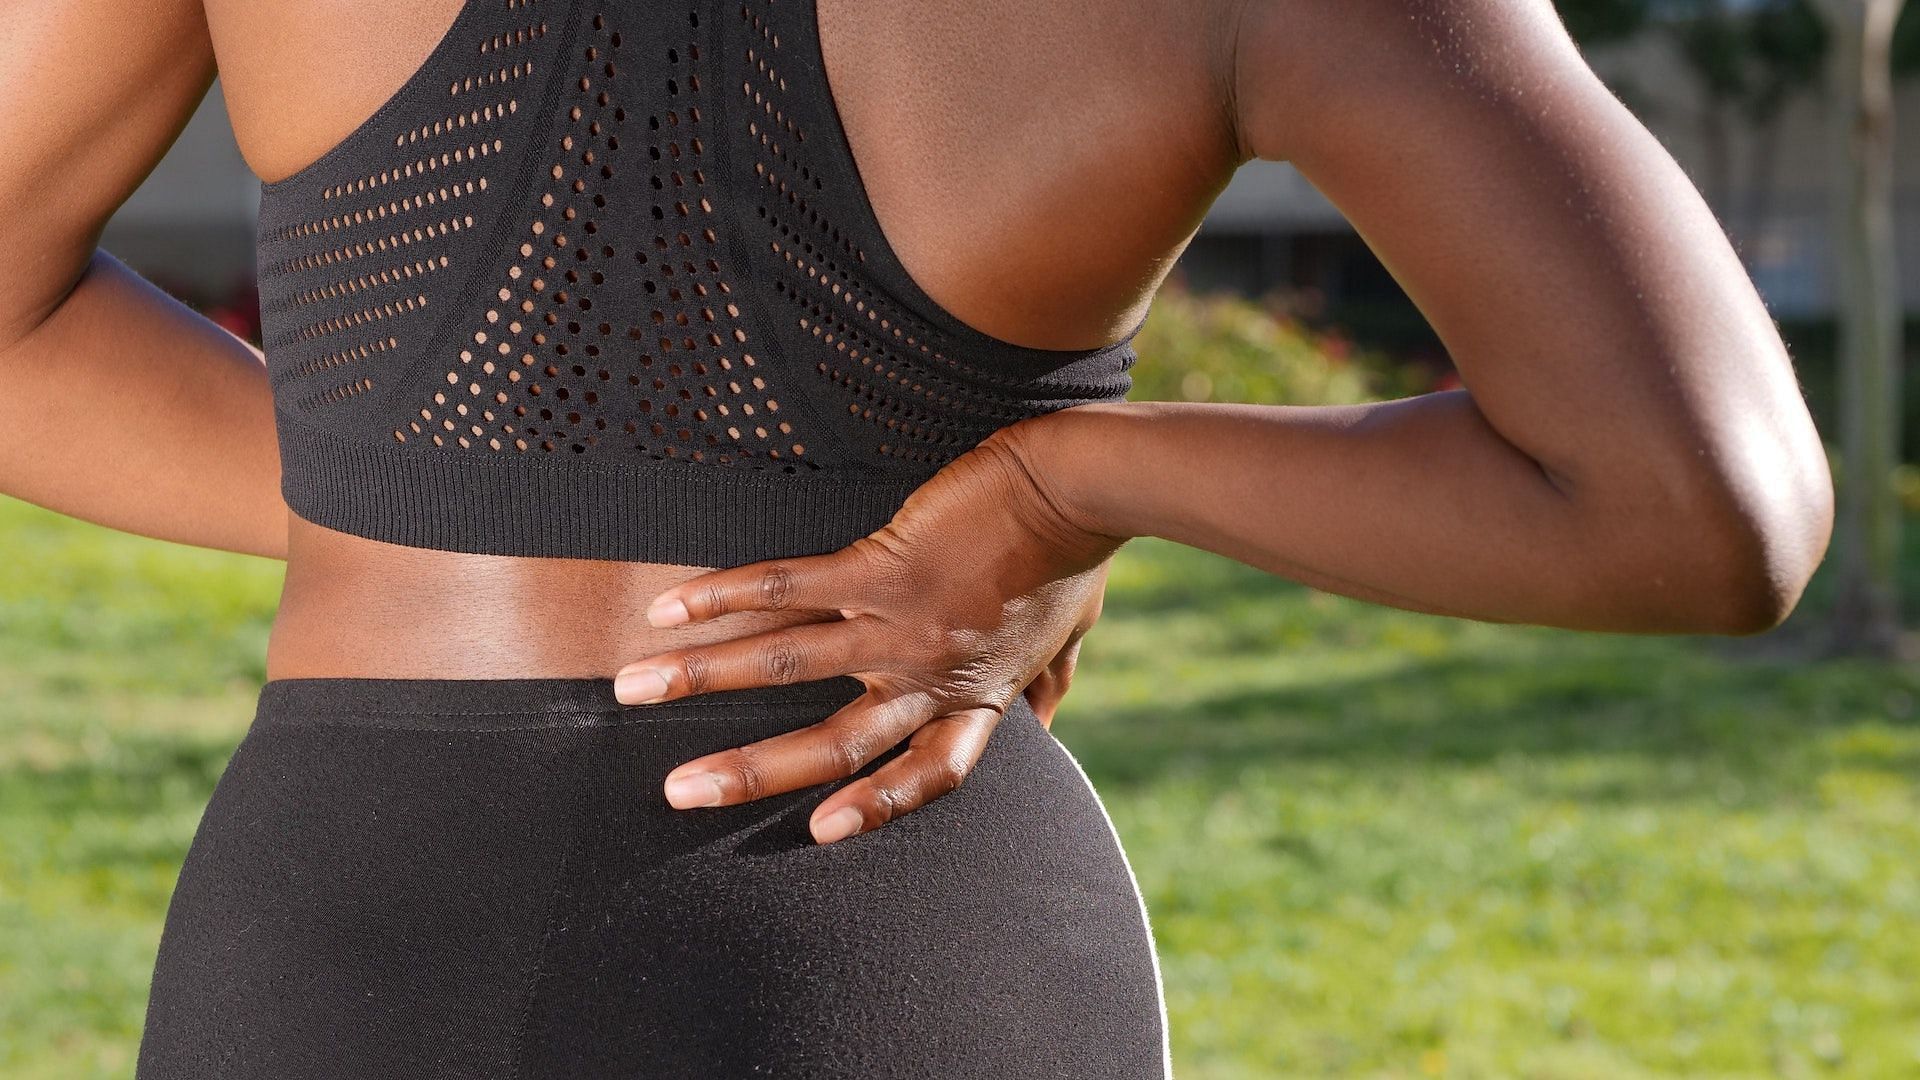 Underactive hips lead to back pain. Image via Pexels/Kindel Media